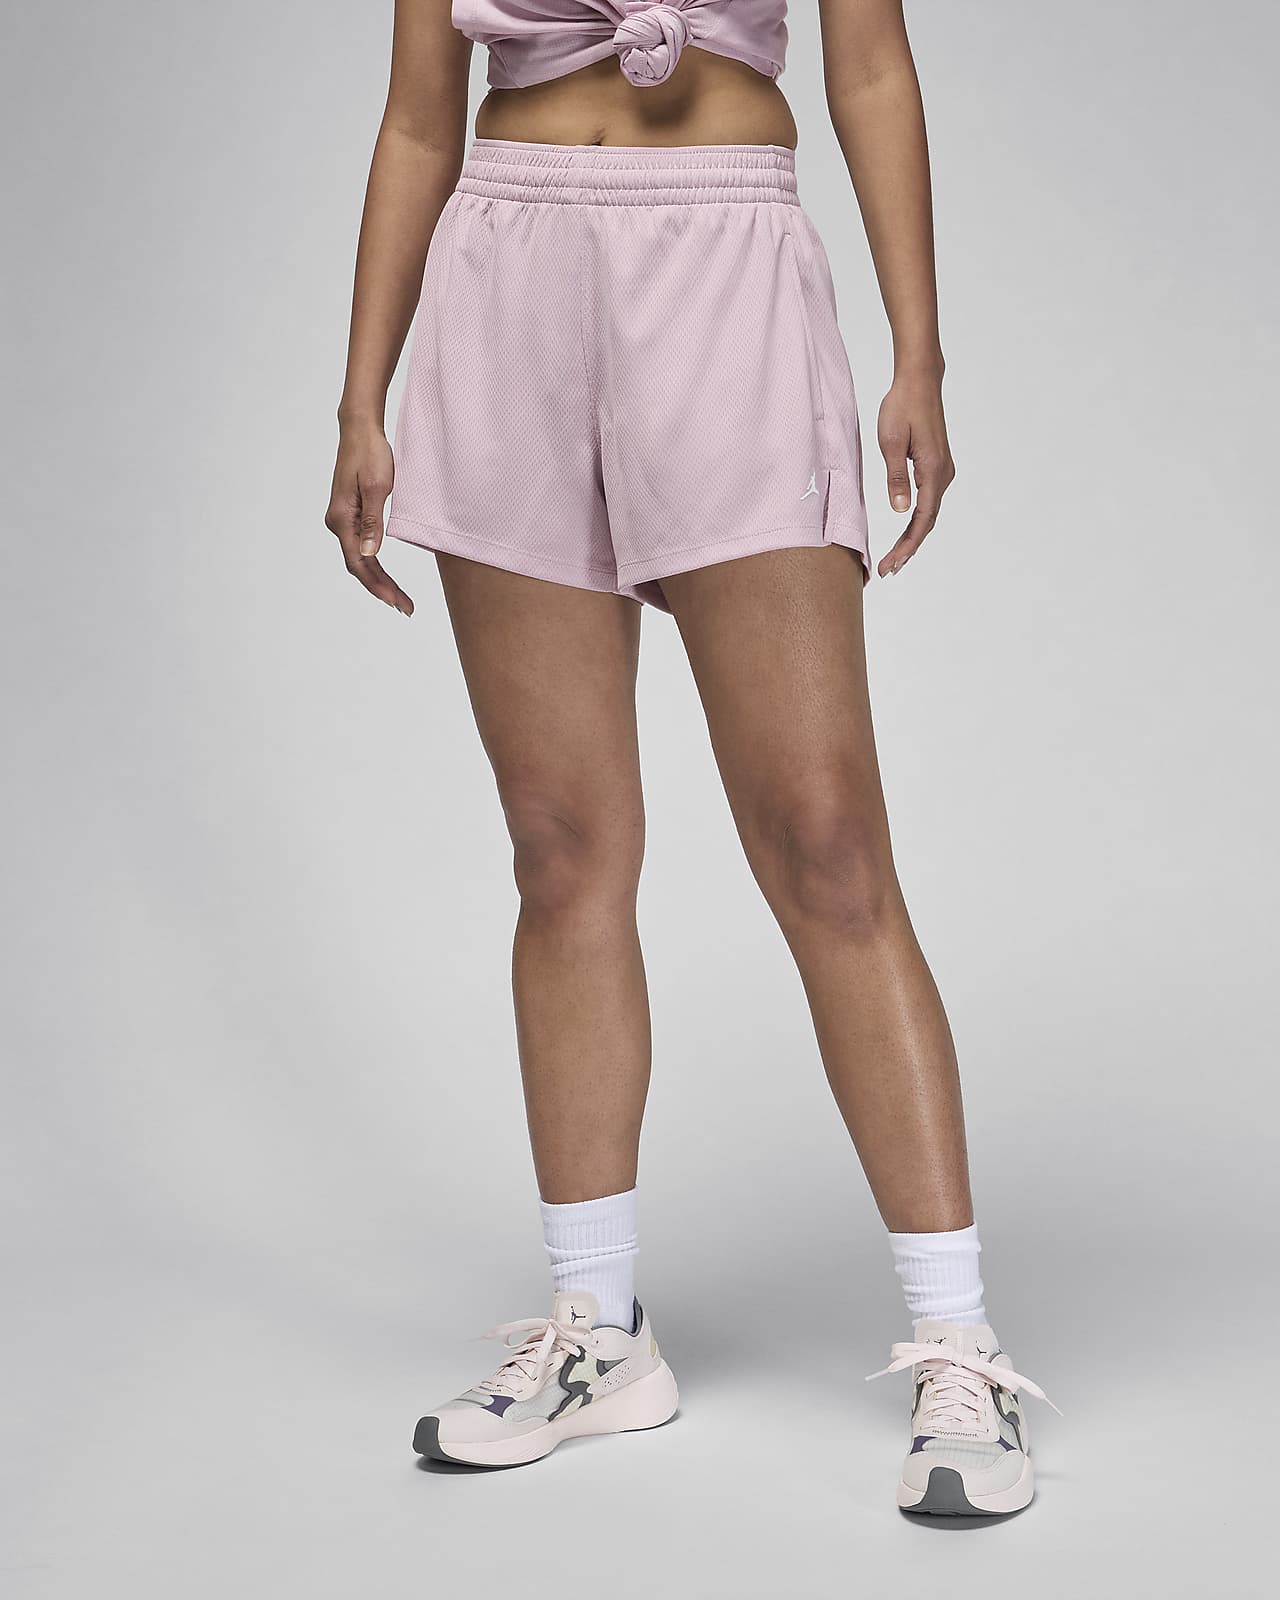 Jordan Sport Women's Mesh Shorts